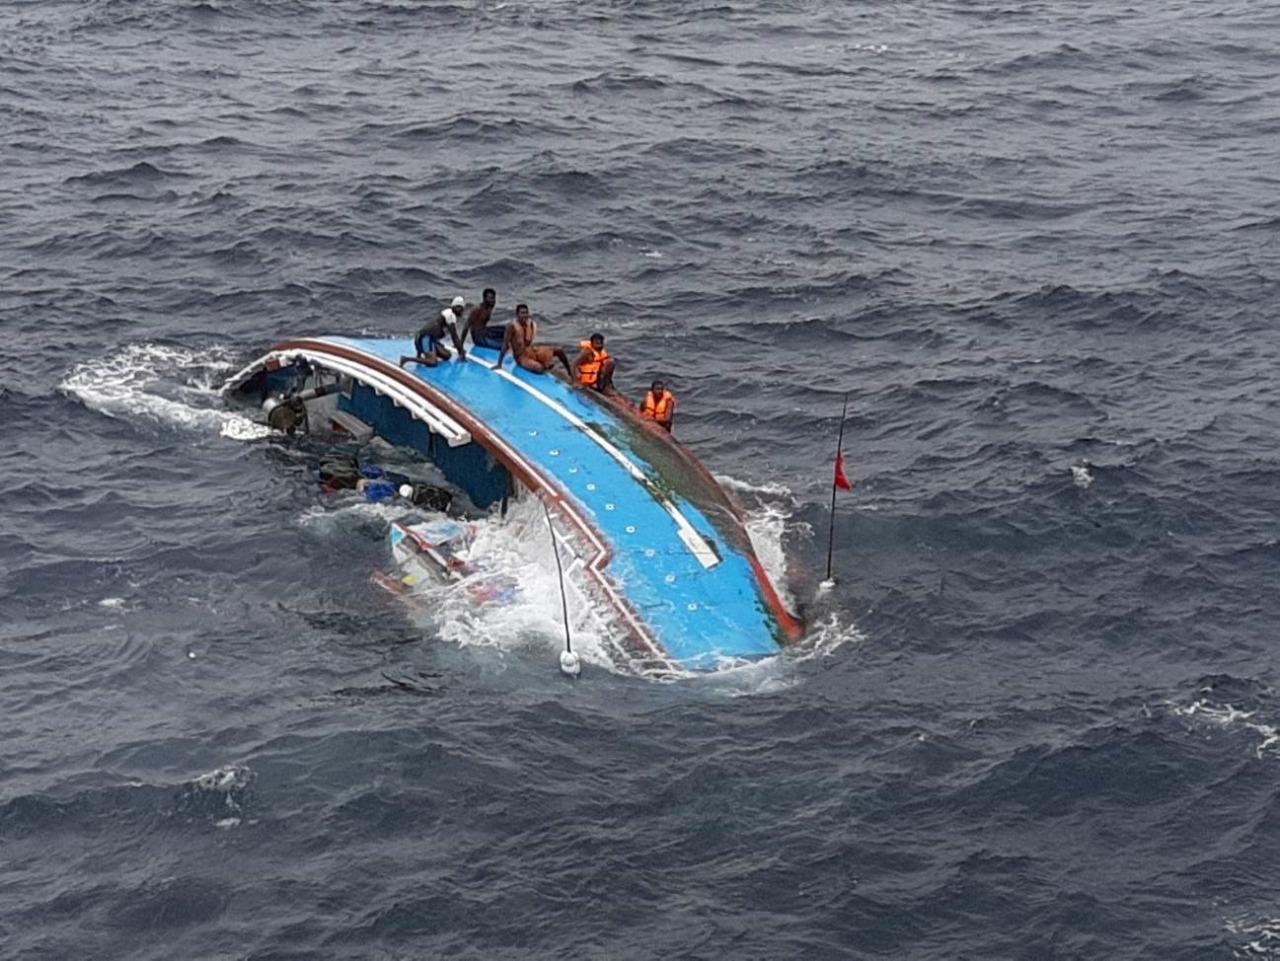 6 Sri Lankan fishermen rescued from rough seas: Indian Coast Guard